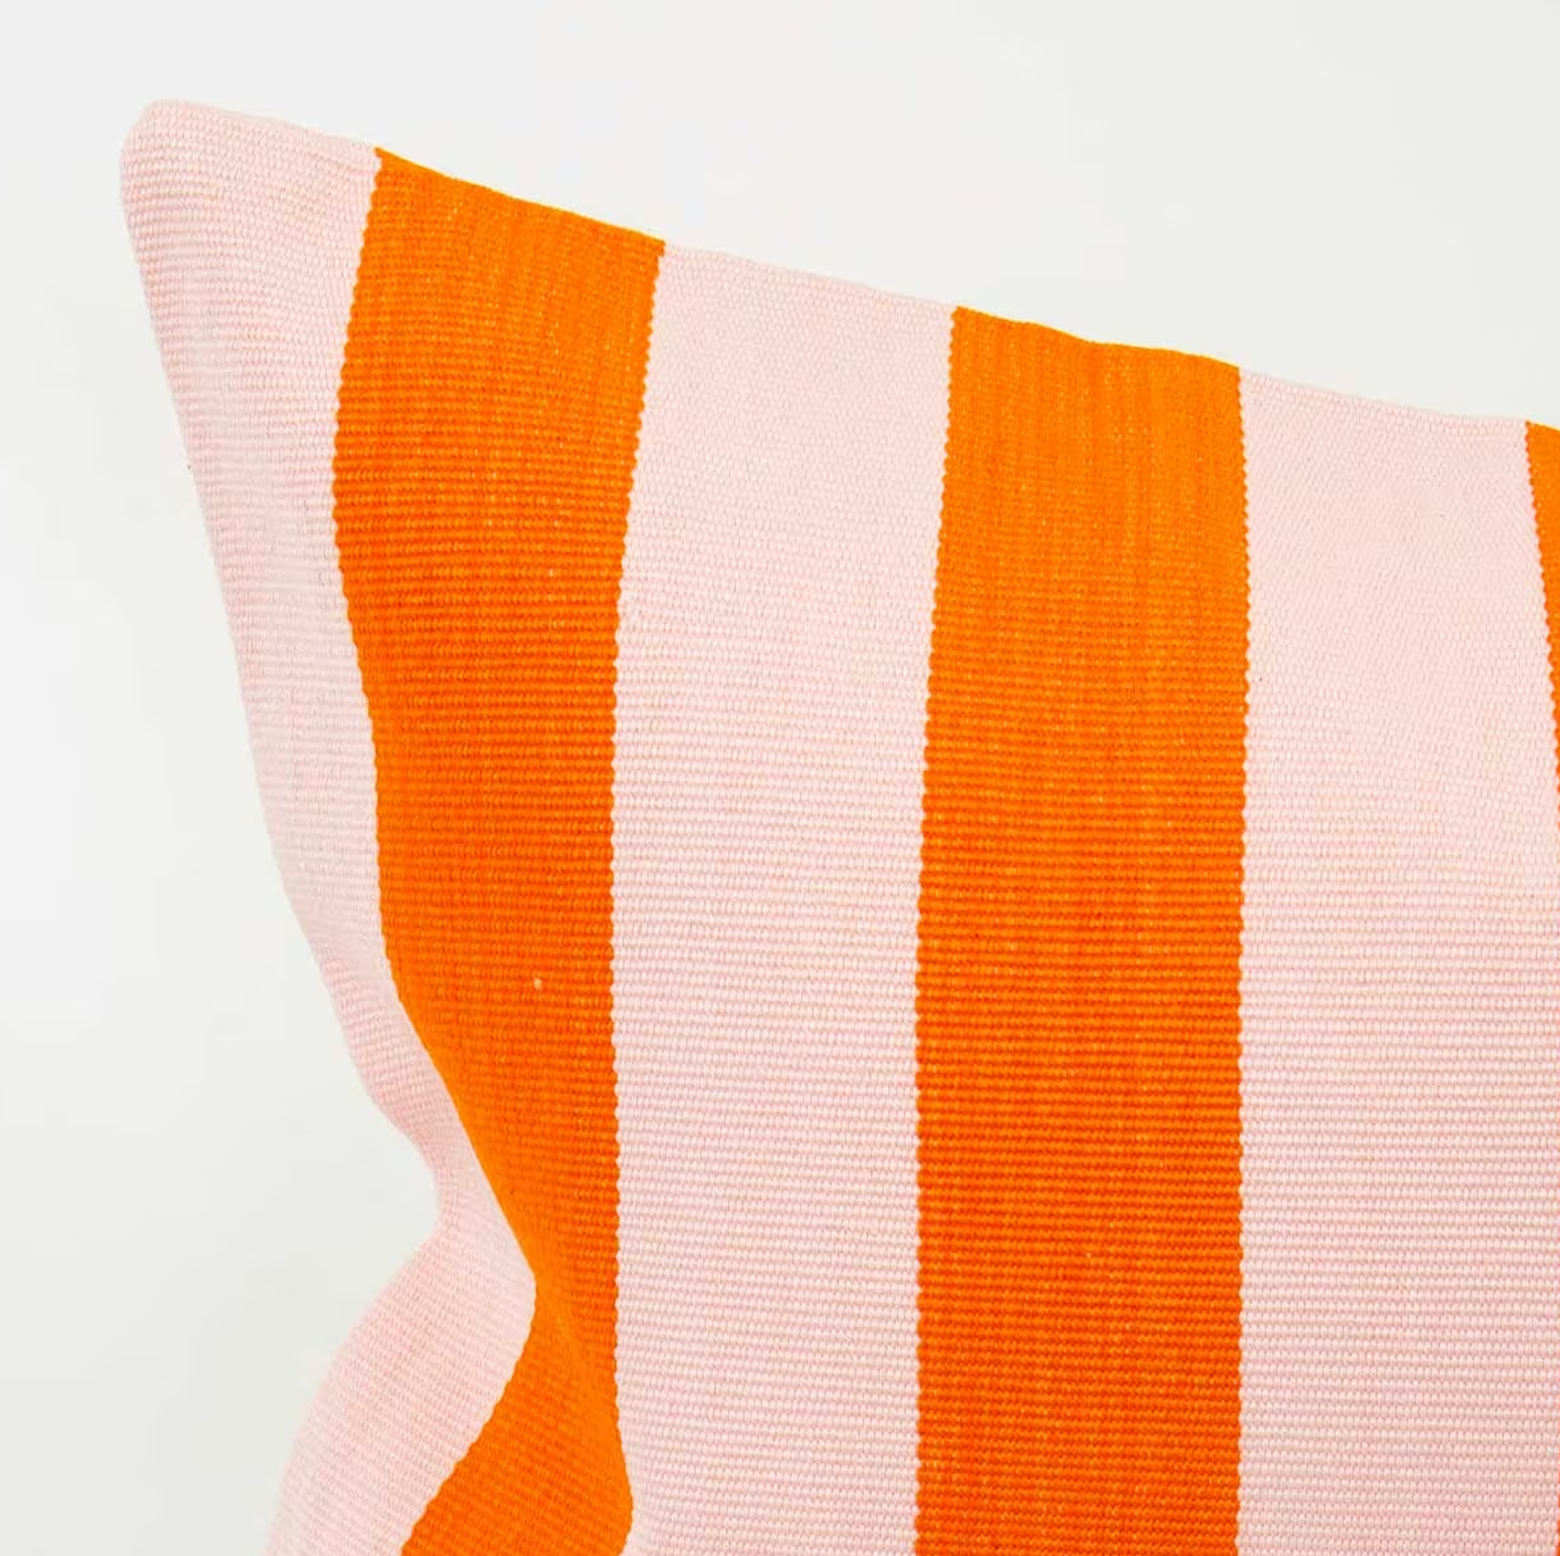 Cushion cover Carla 30x50, orange / pink, handprinted